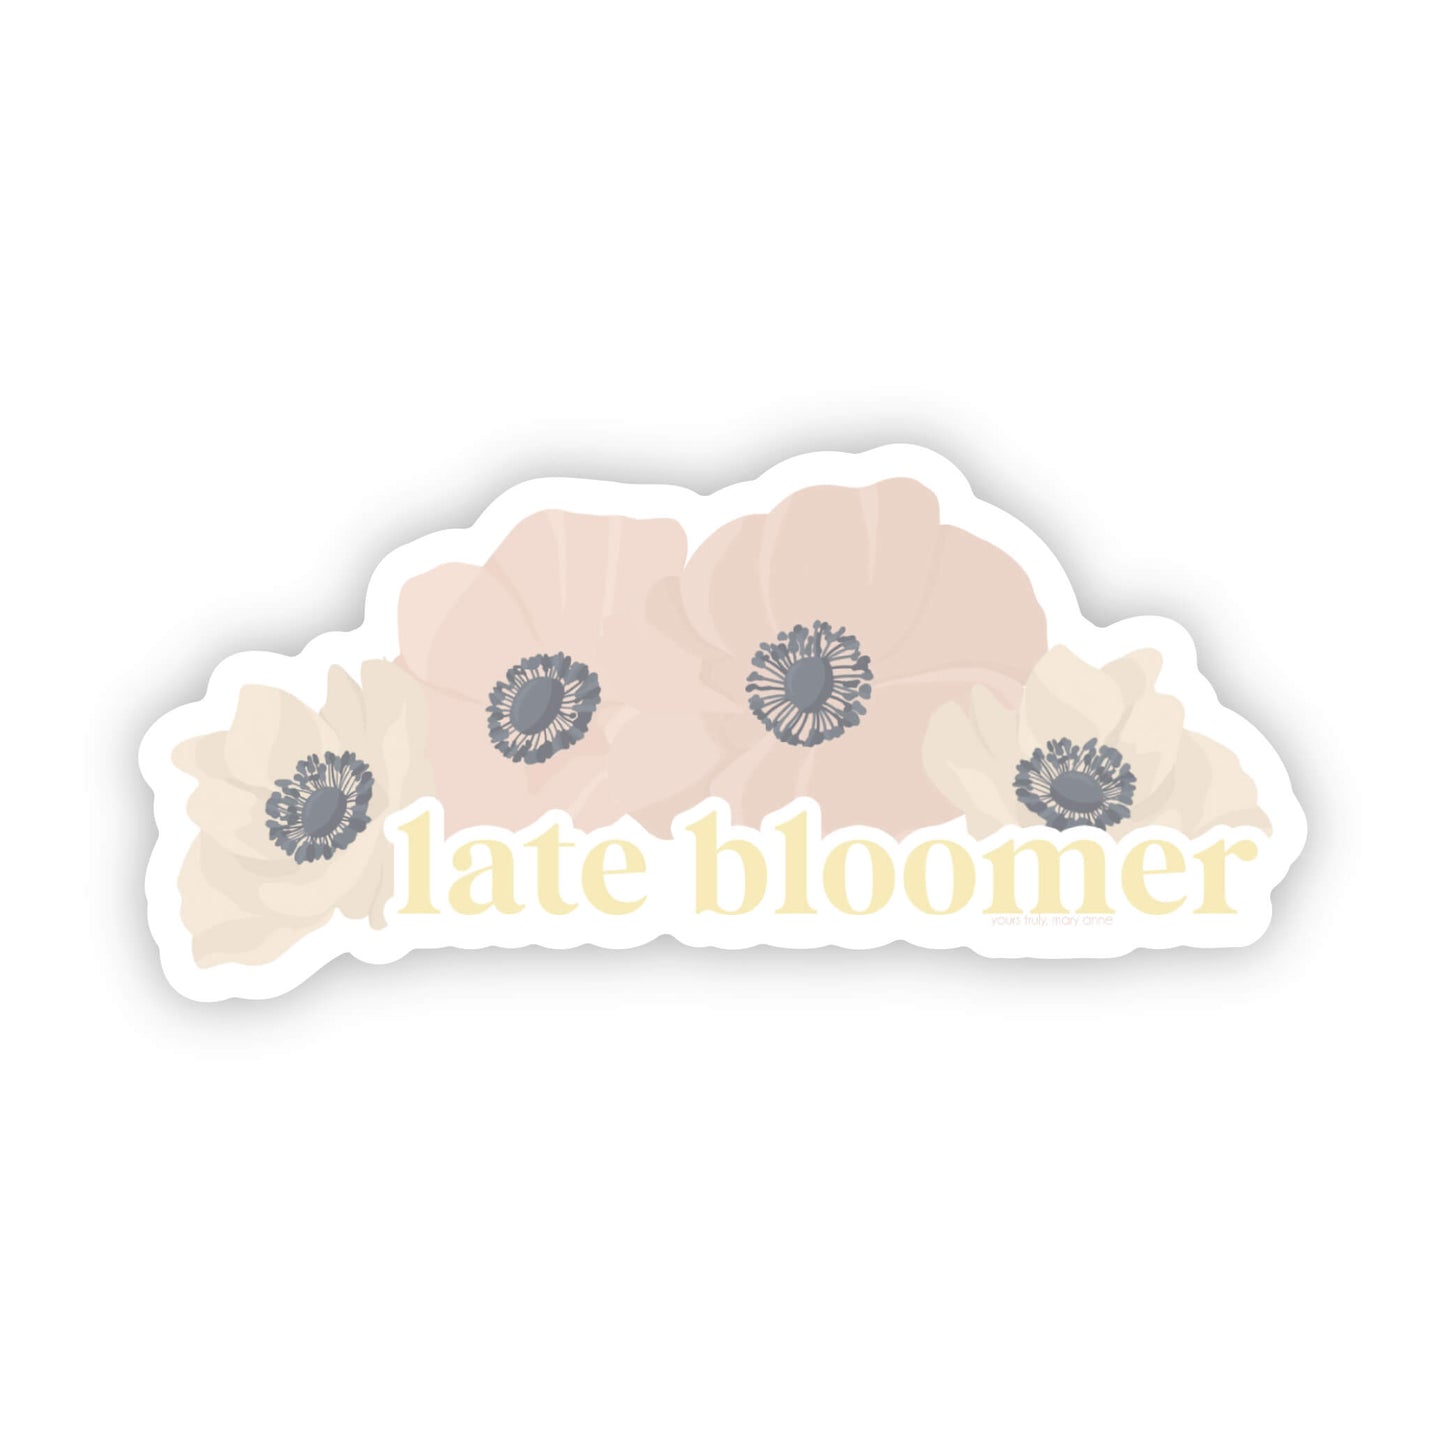 Late Bloomer Sticker